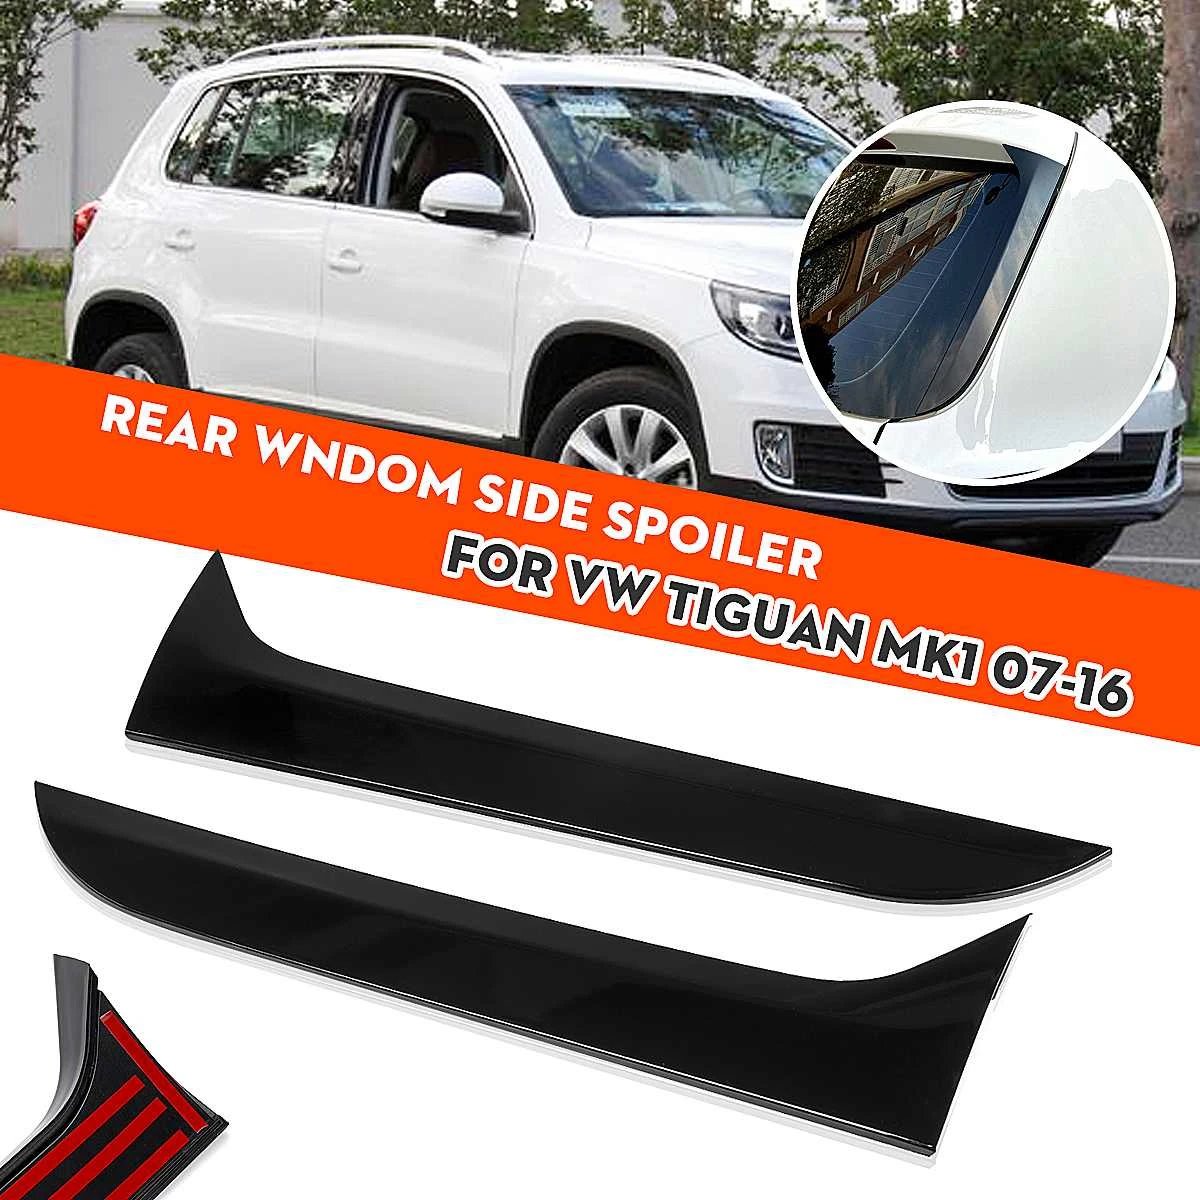 Gloss Black Rear Window Side Spoiler Canard Canards Splitter For VW Tiguan MK1 2007 2008 2009 2010 2011 2012-2016/ for MK2 2017+